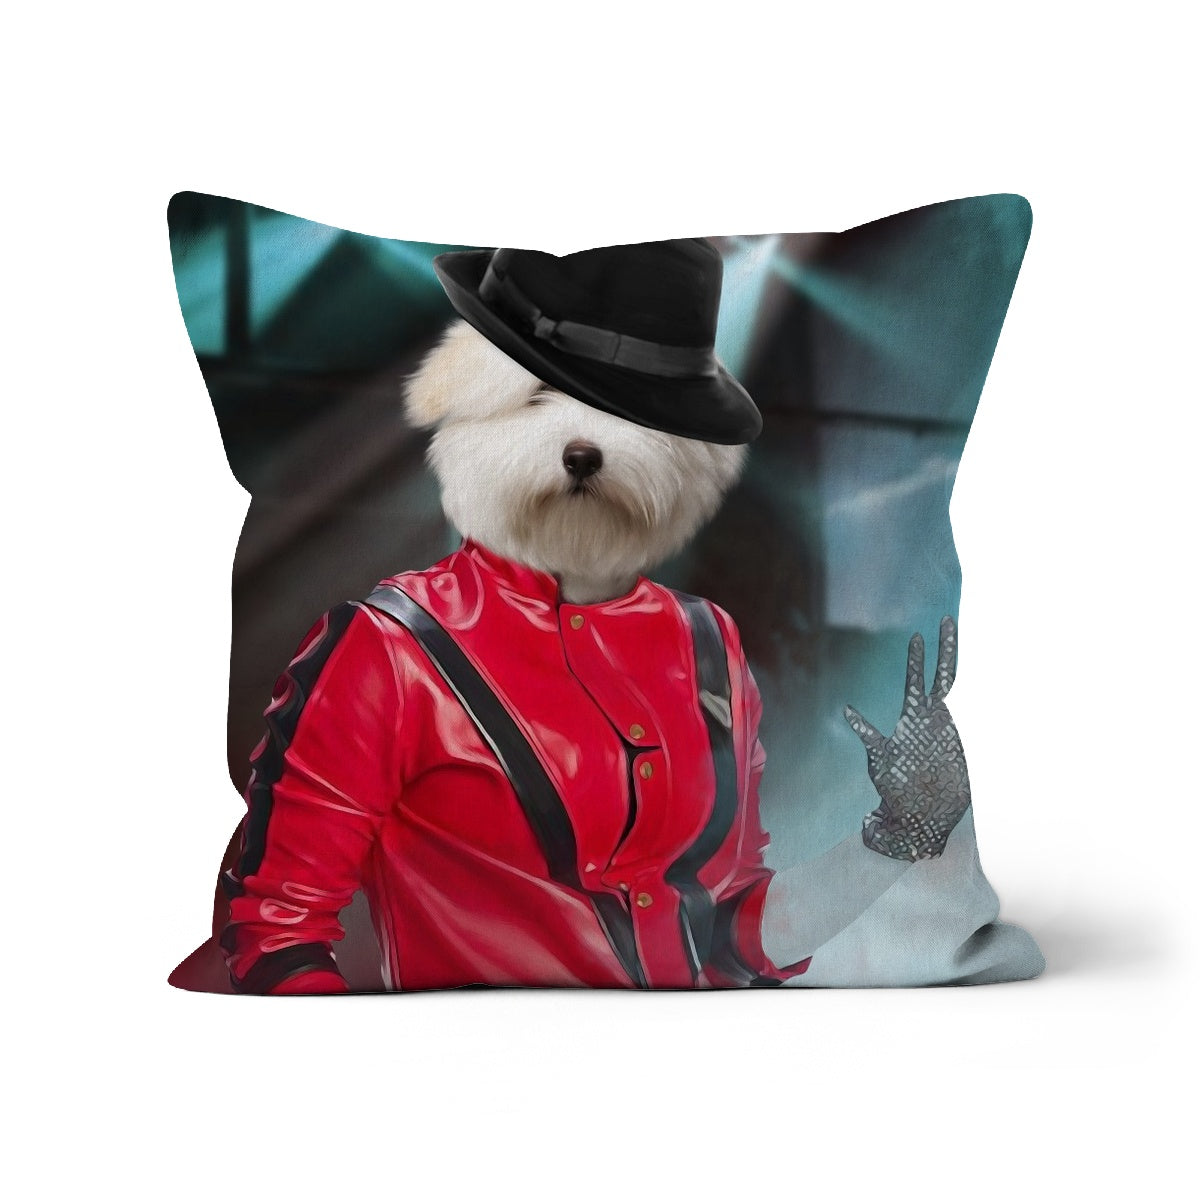 The Michael Jackson Paw & Glory, paw and glory, pet pillow, pillow custom, Pet Portraits cushion, dog pillow custom, custom pet pillows, create your own pillow, customized throw pillows